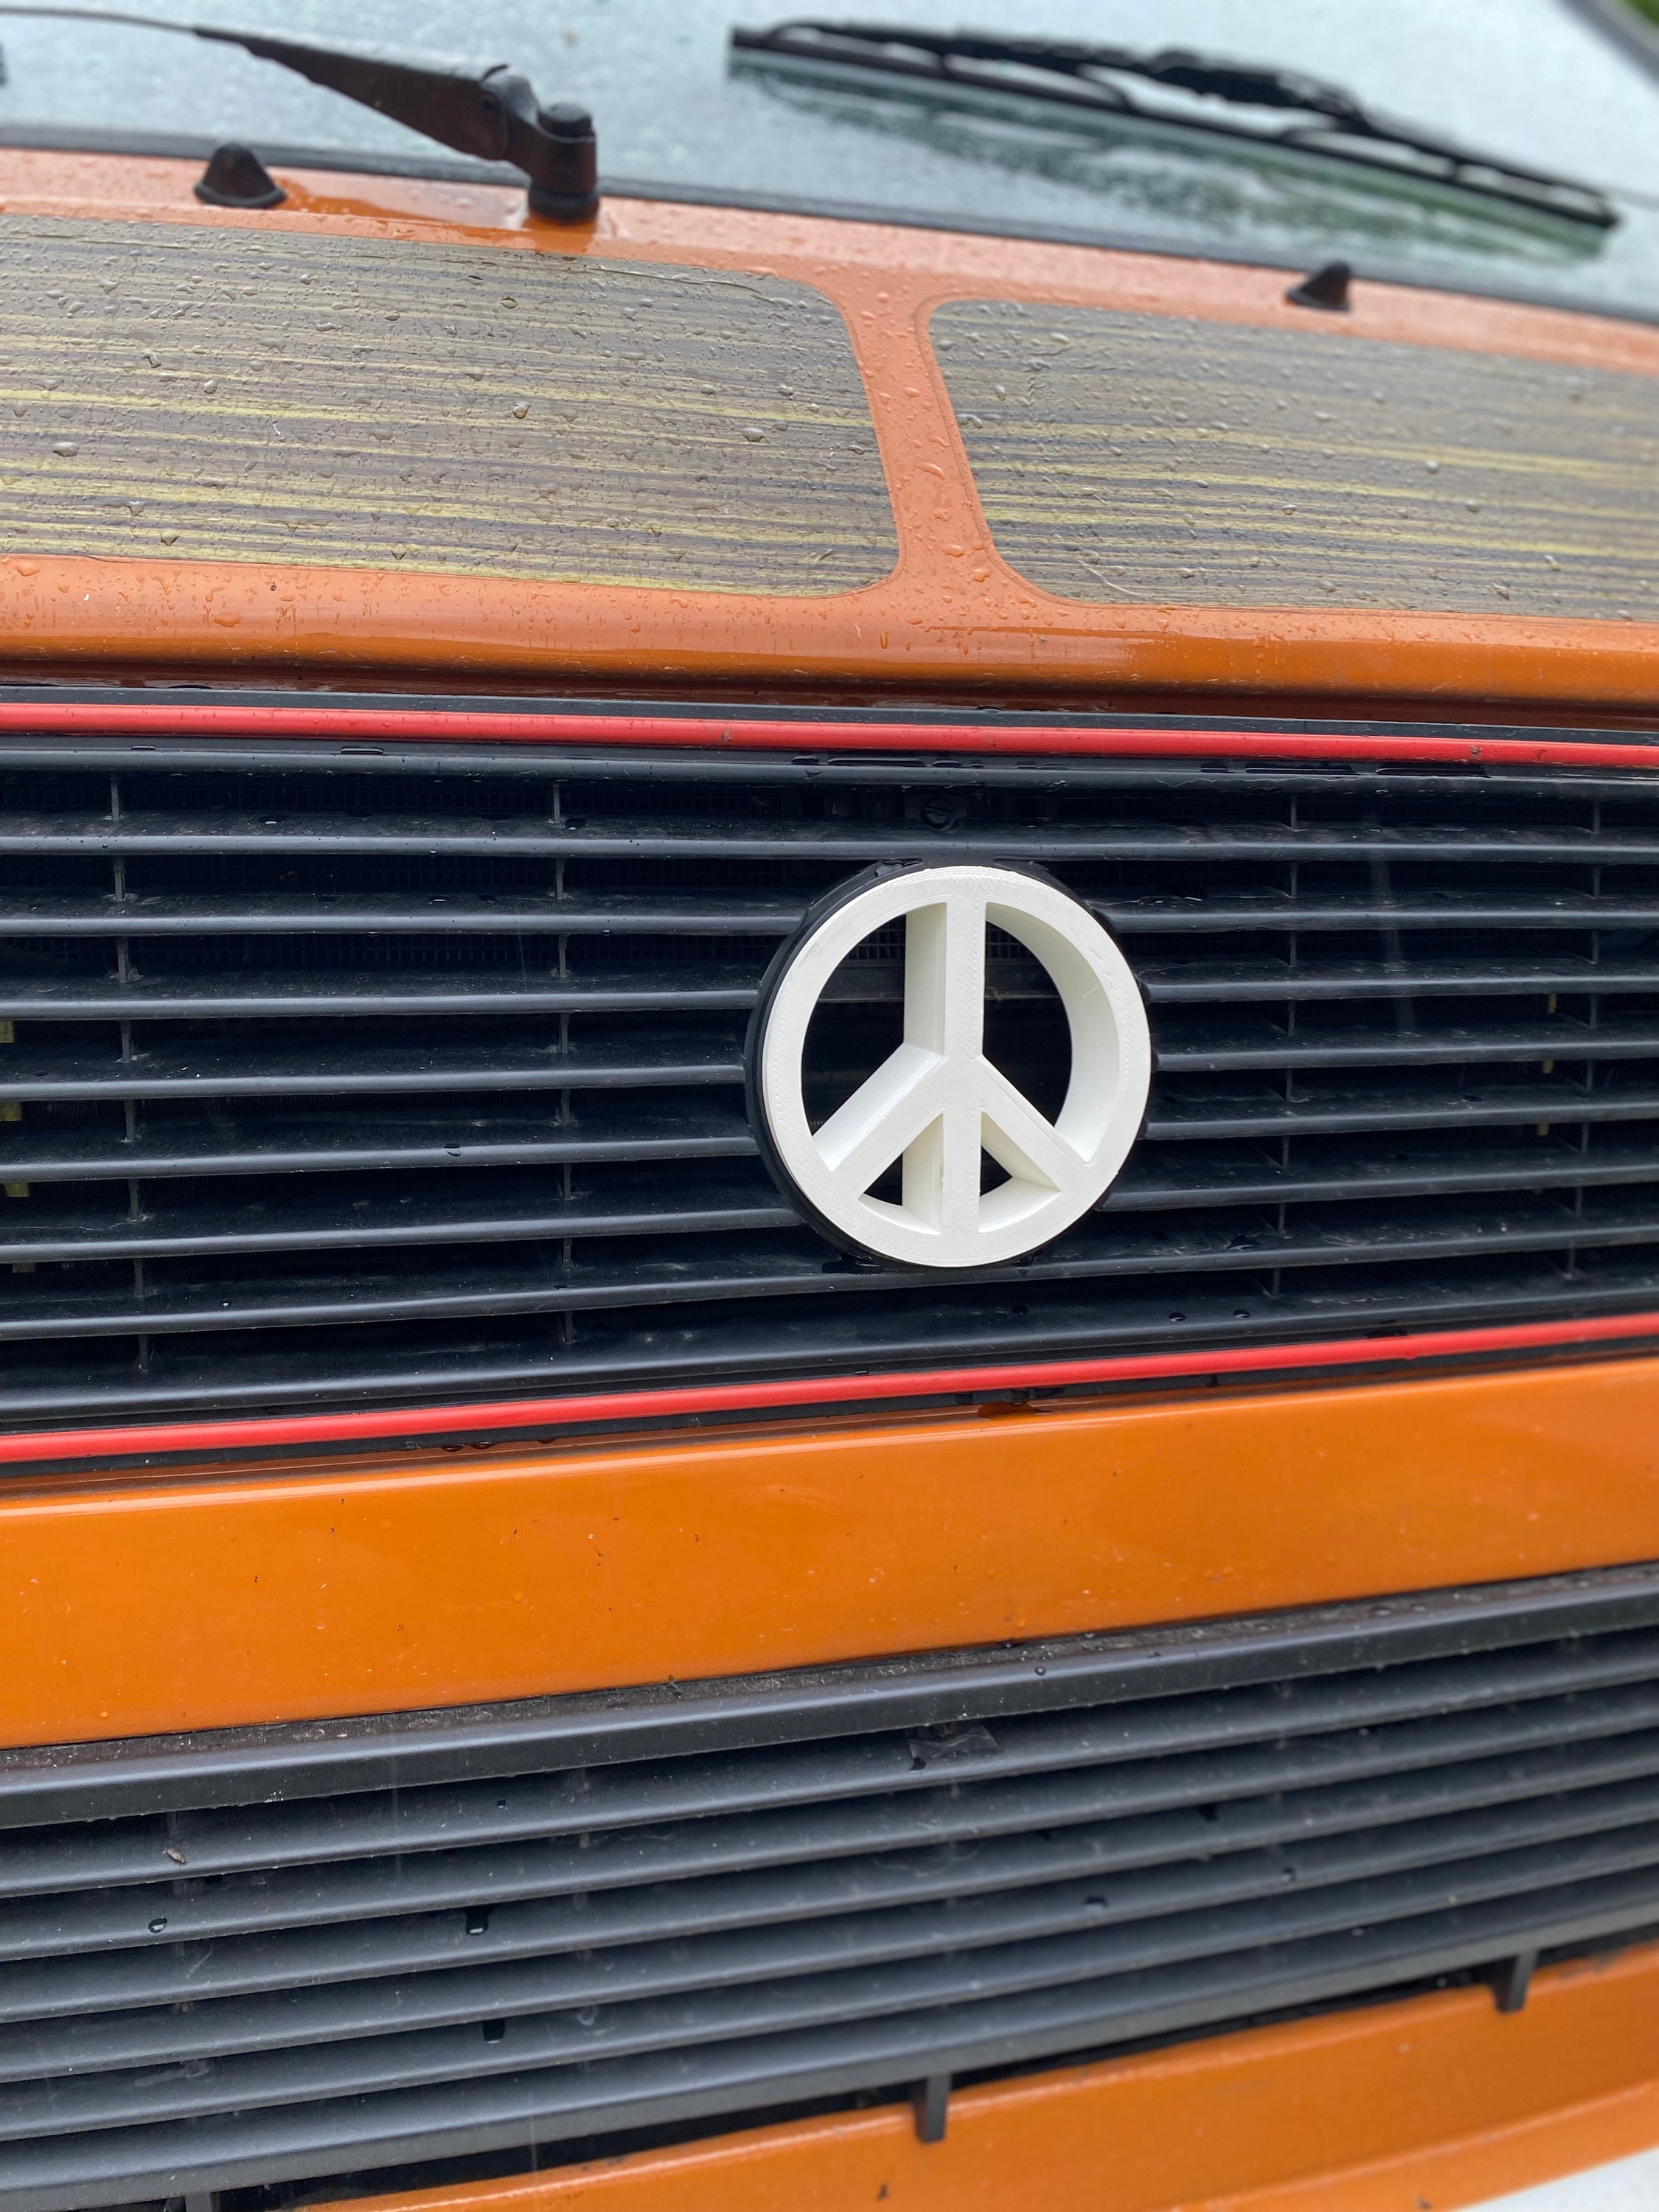 VW-Emblem auf Kühlergrill des Volkswagen Fahrzeug Aufkleber Stockfotografie  - Alamy